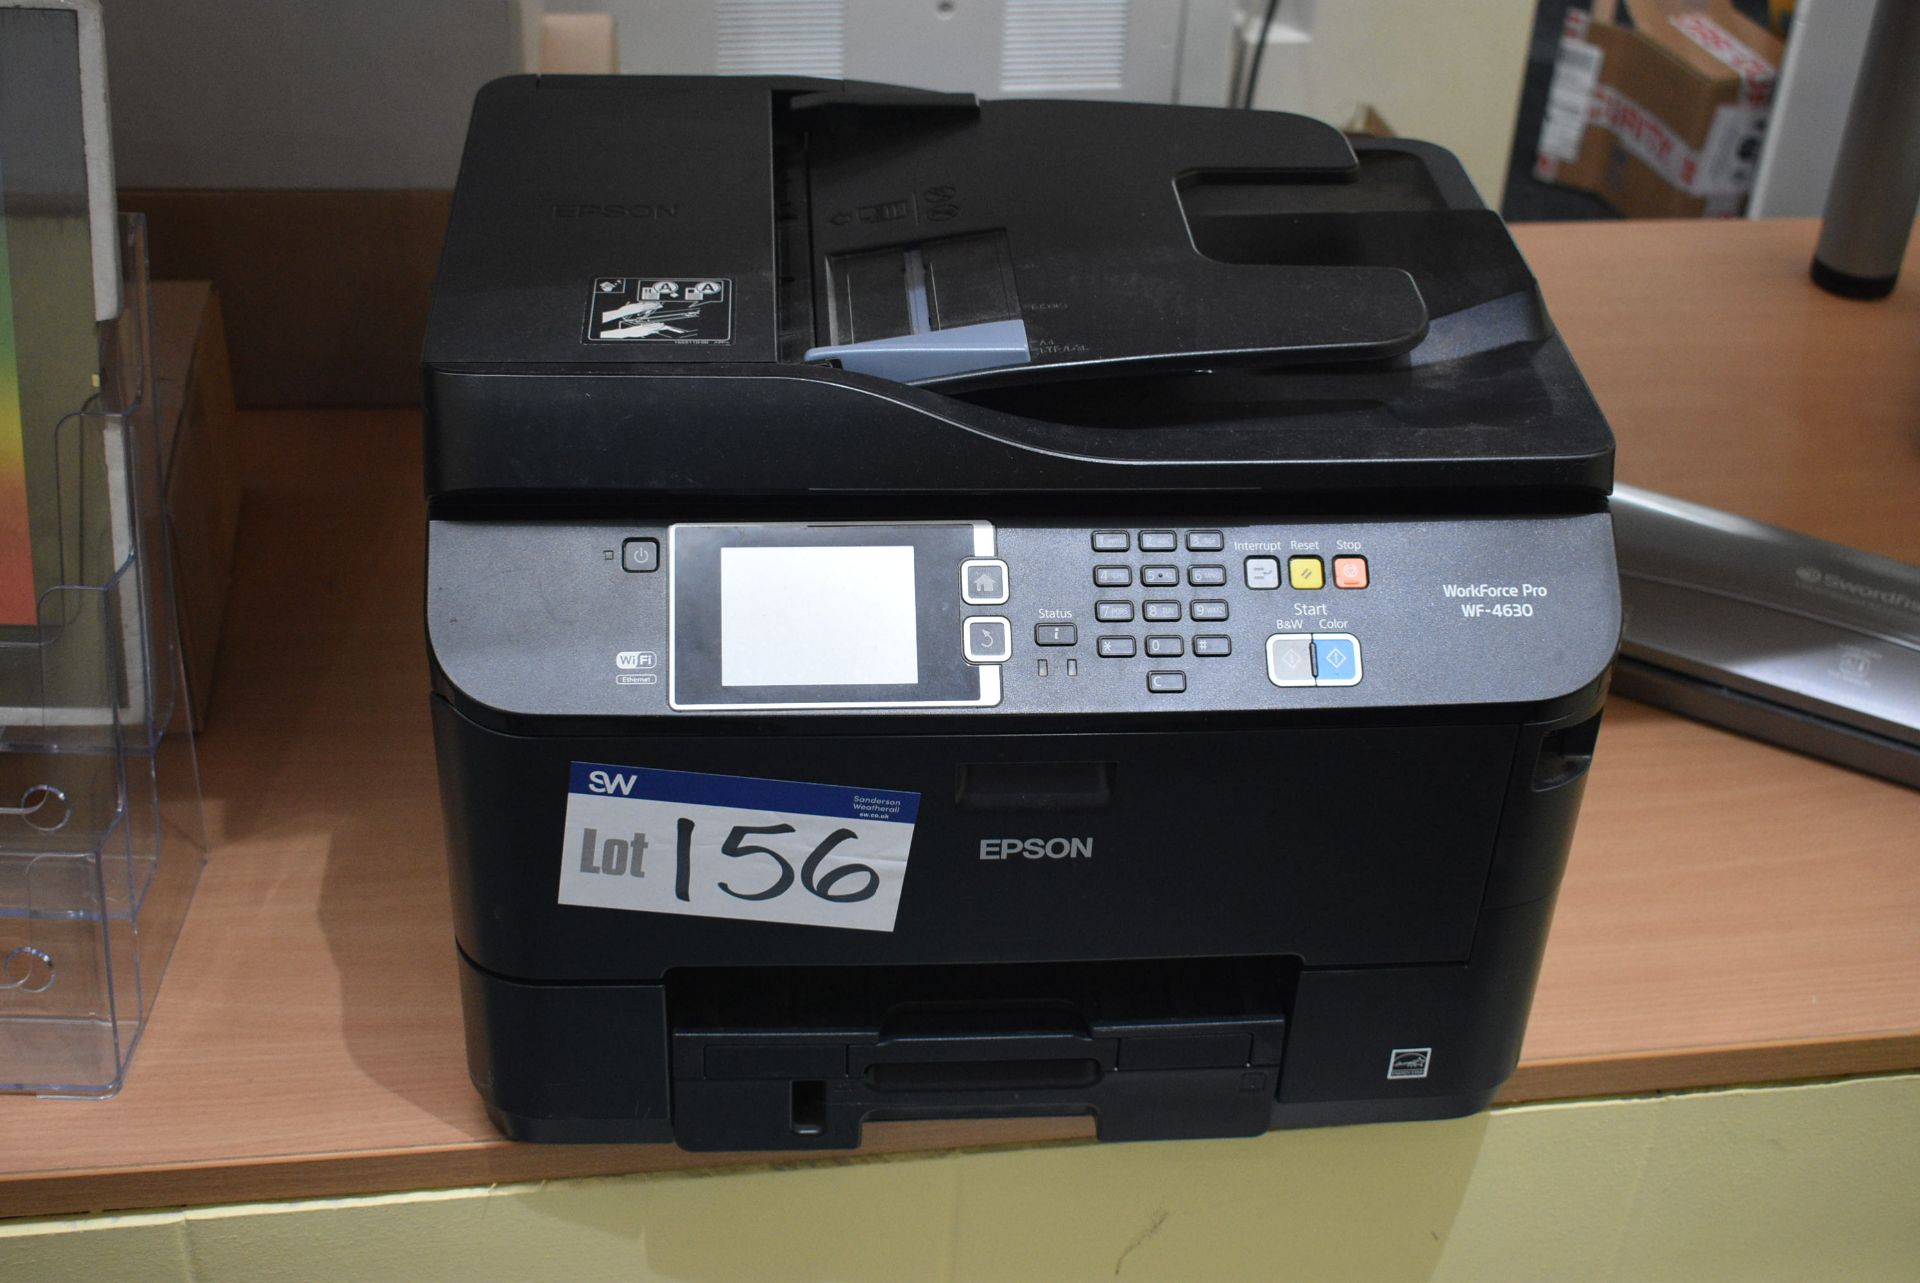 Epson WF-46230 WorkForce Pro Scanner Printer (note - Image 2 of 3